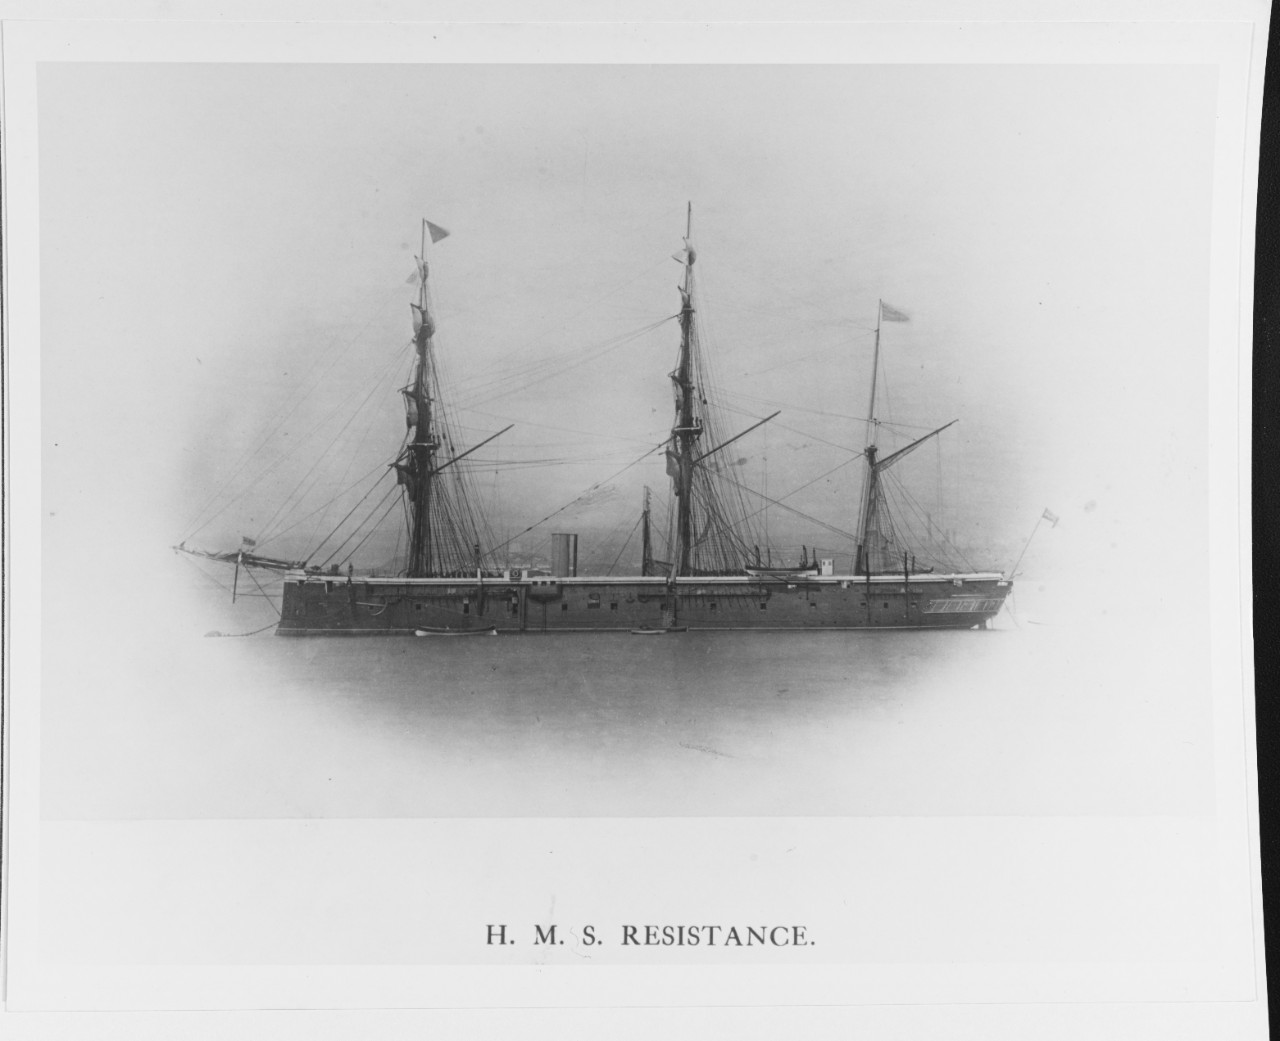 HMS RESISTANCE (BRITISH BATTLESHIP, 1861)